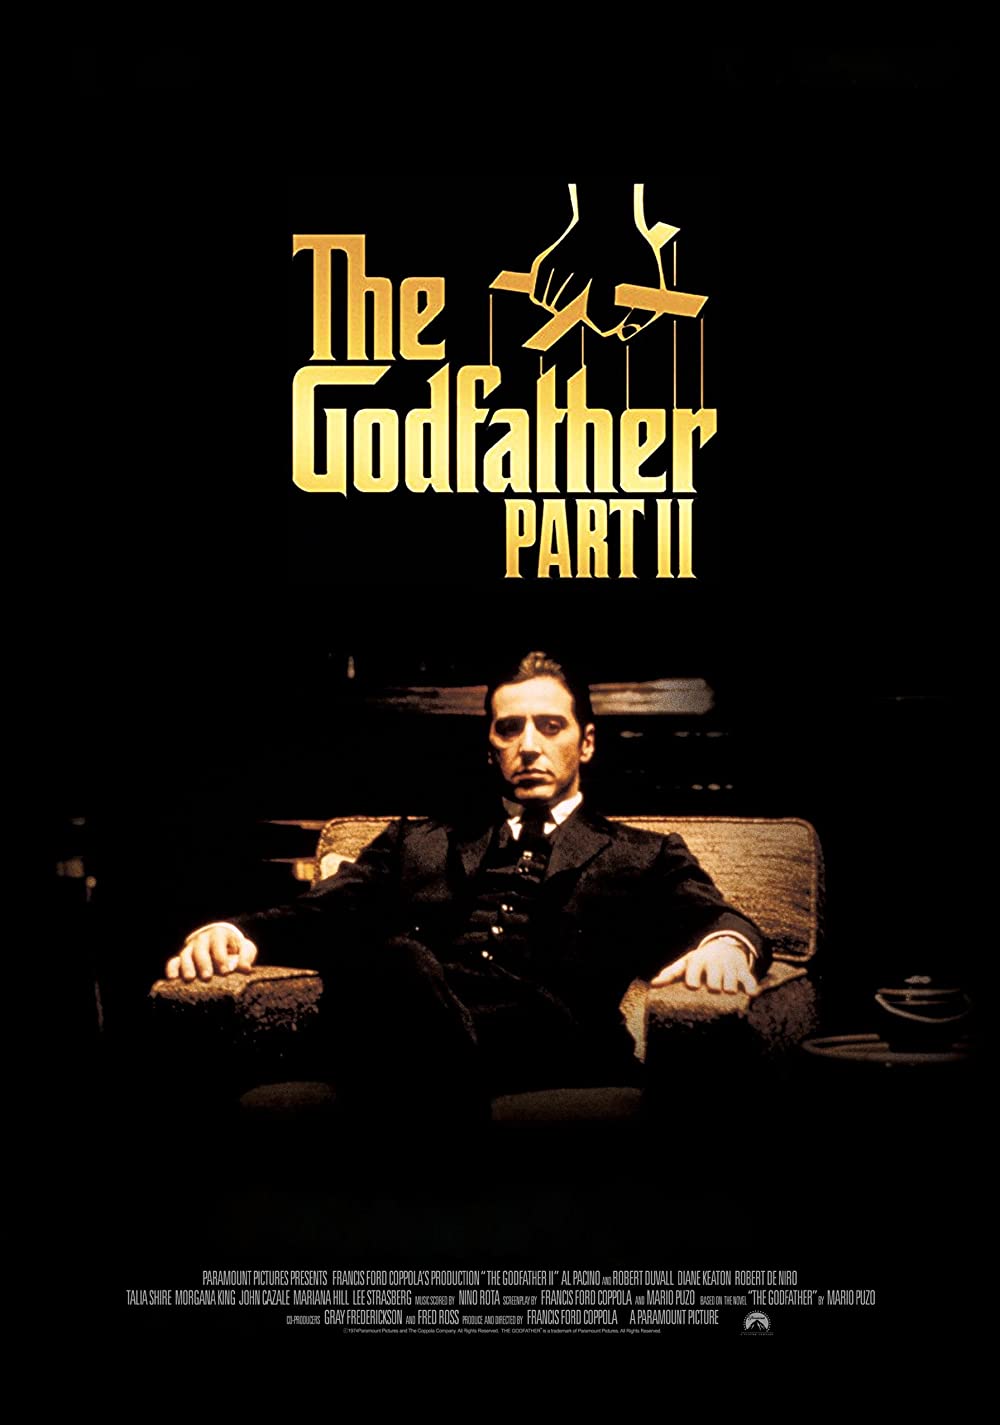 Filmbeschreibung zu The Godfather Part II